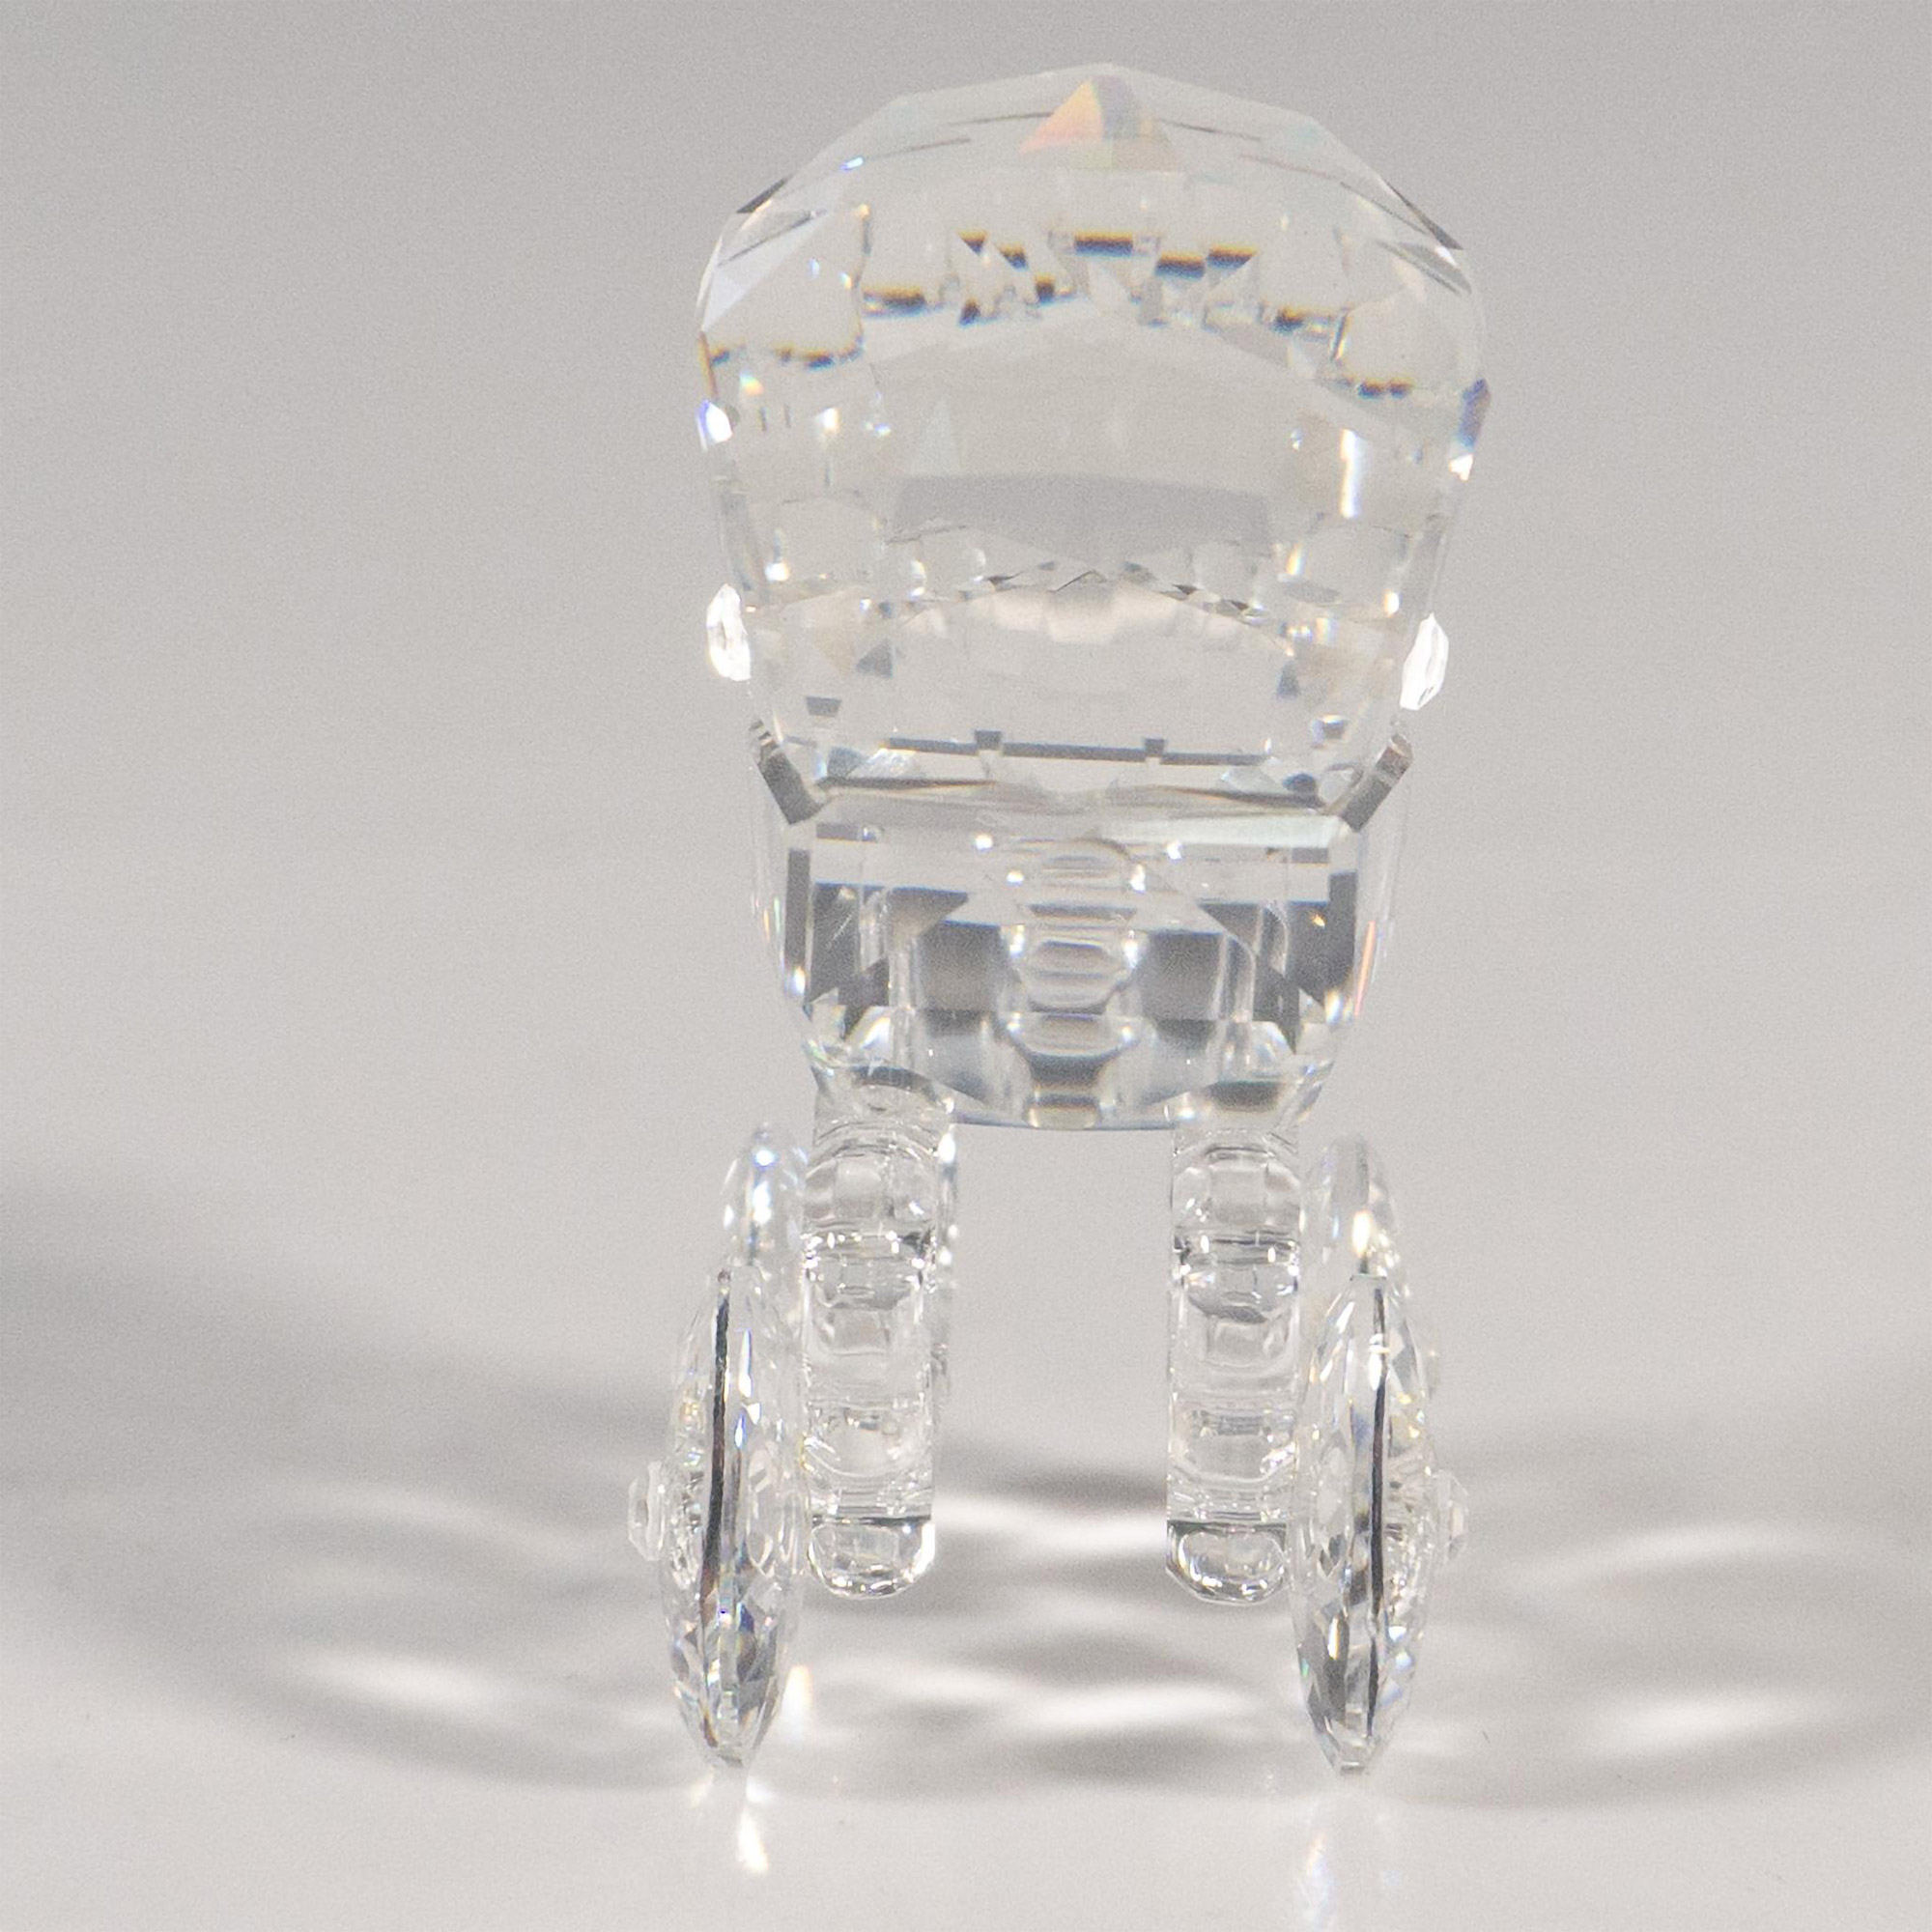 Swarovski Silver Crystal Figurine, Baby Carriage - Image 4 of 6